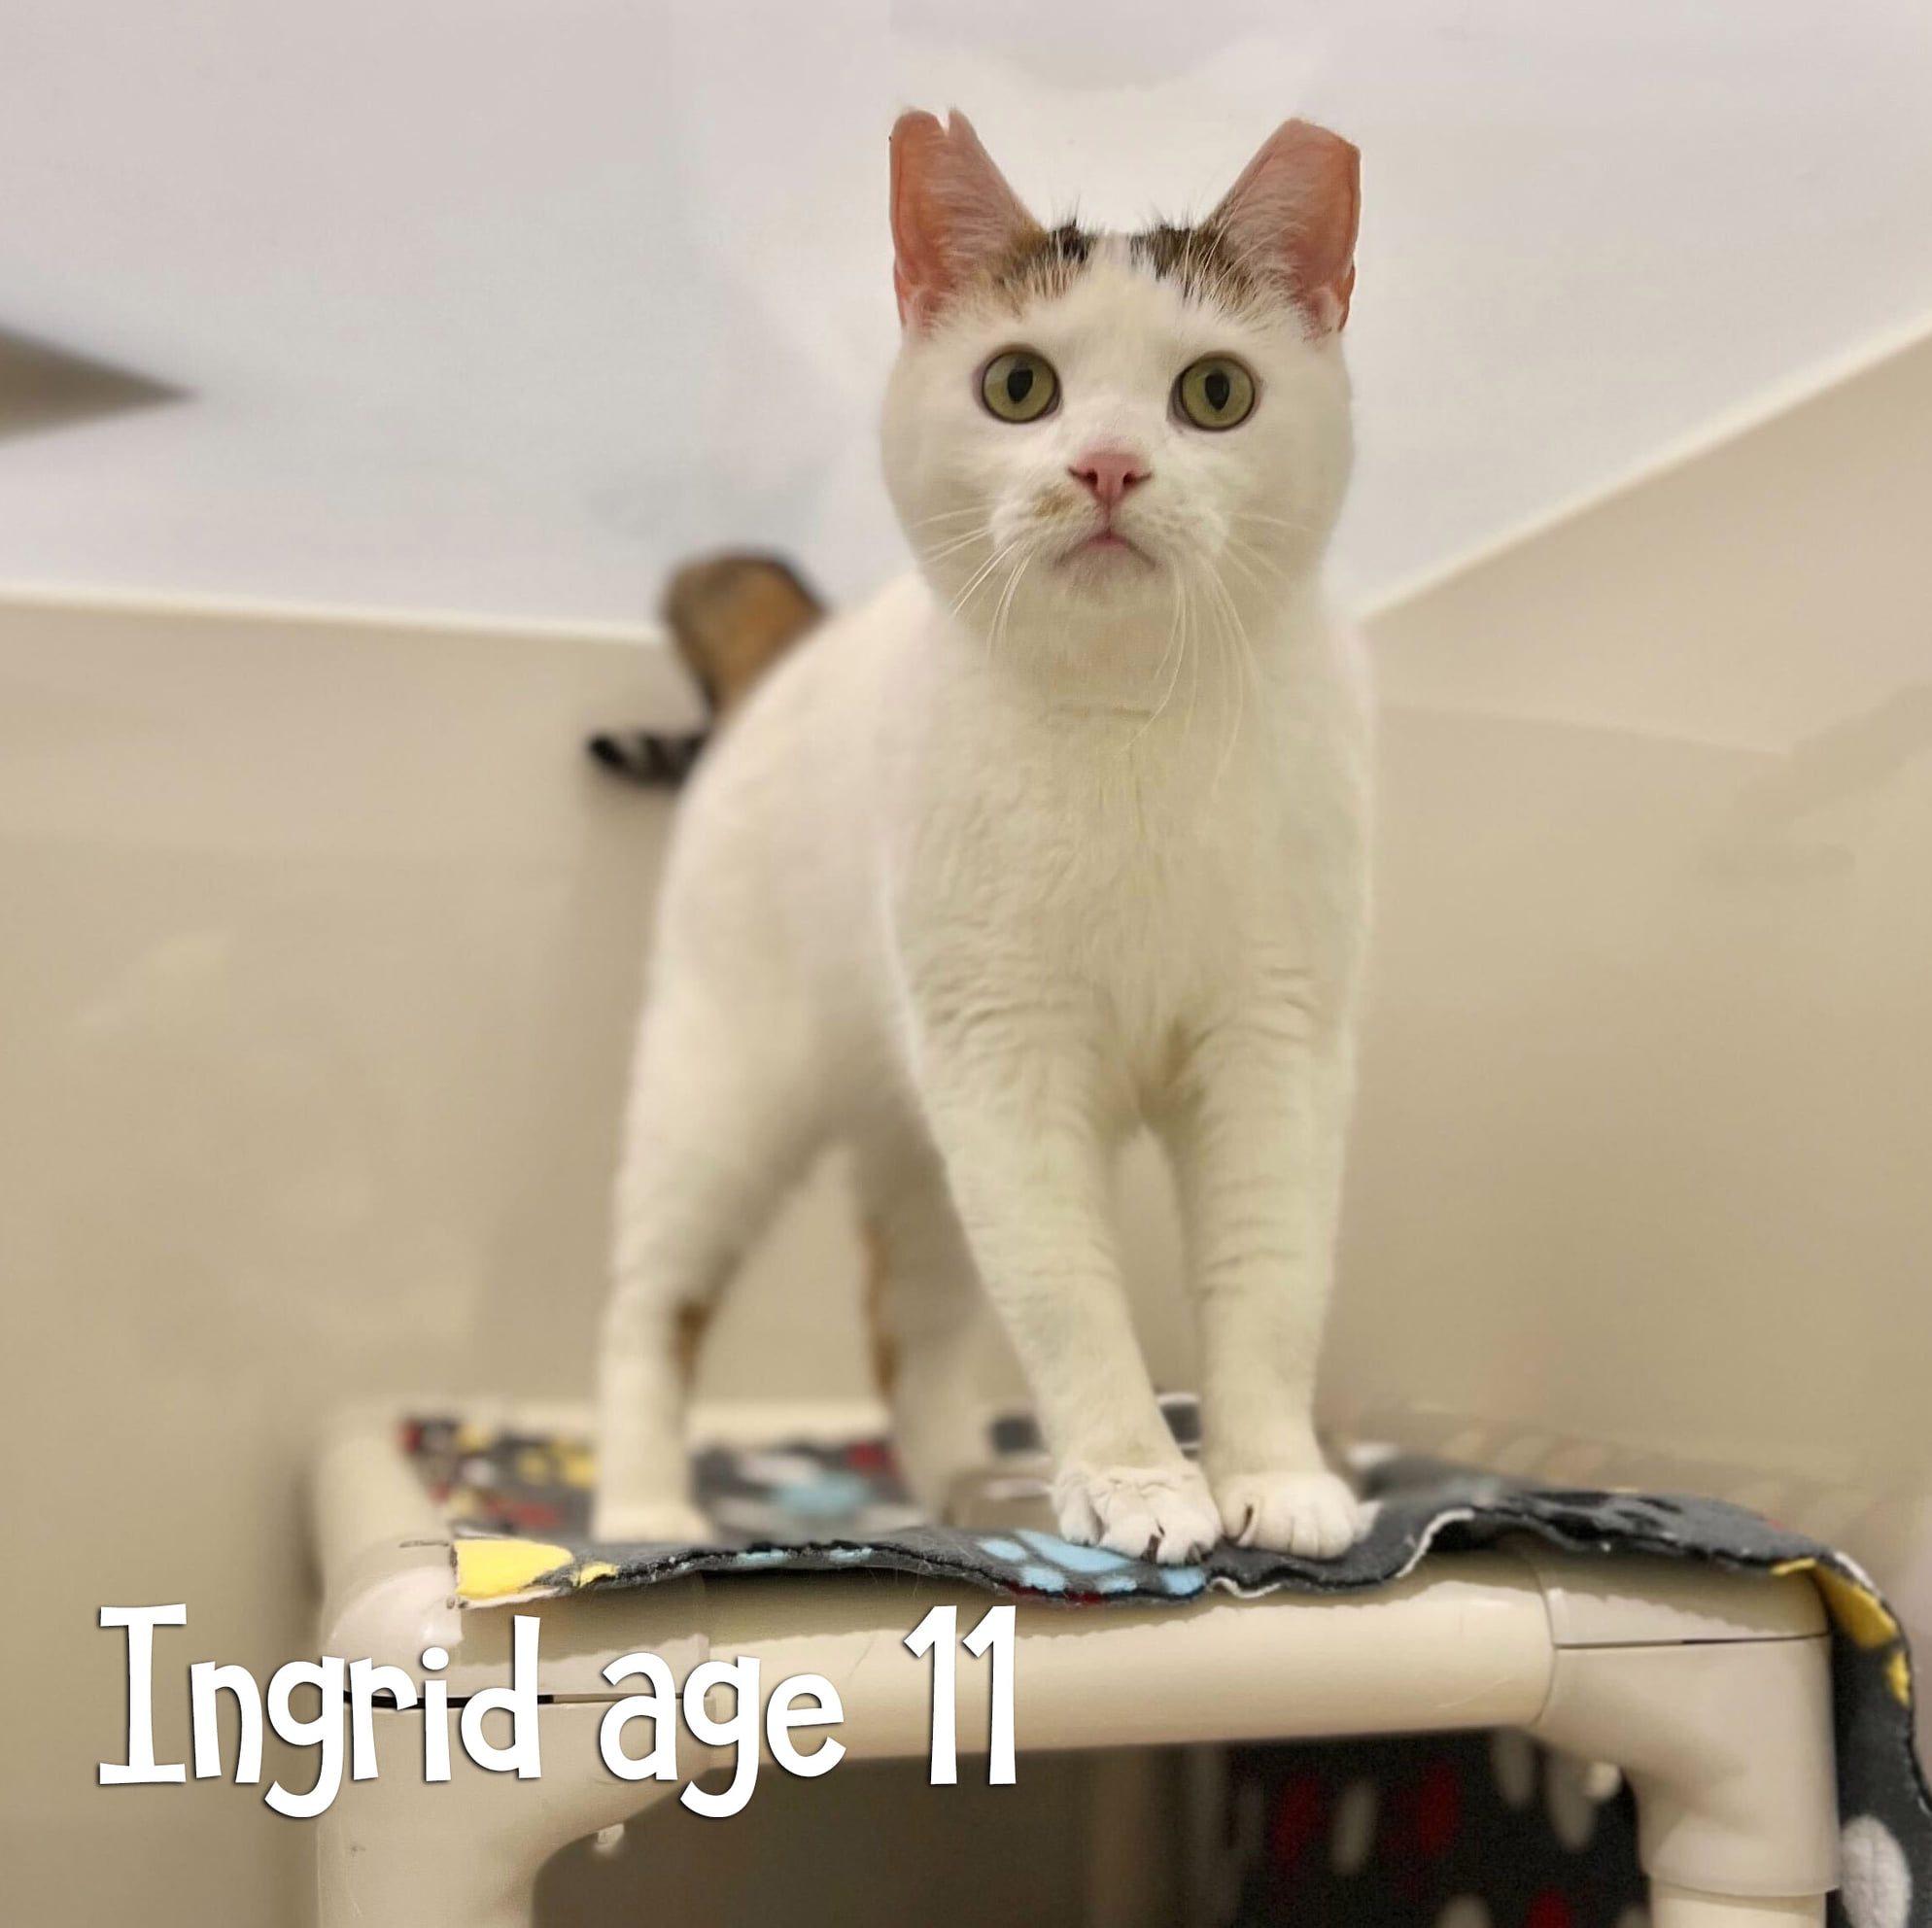 Ingrid Cat for Adoption